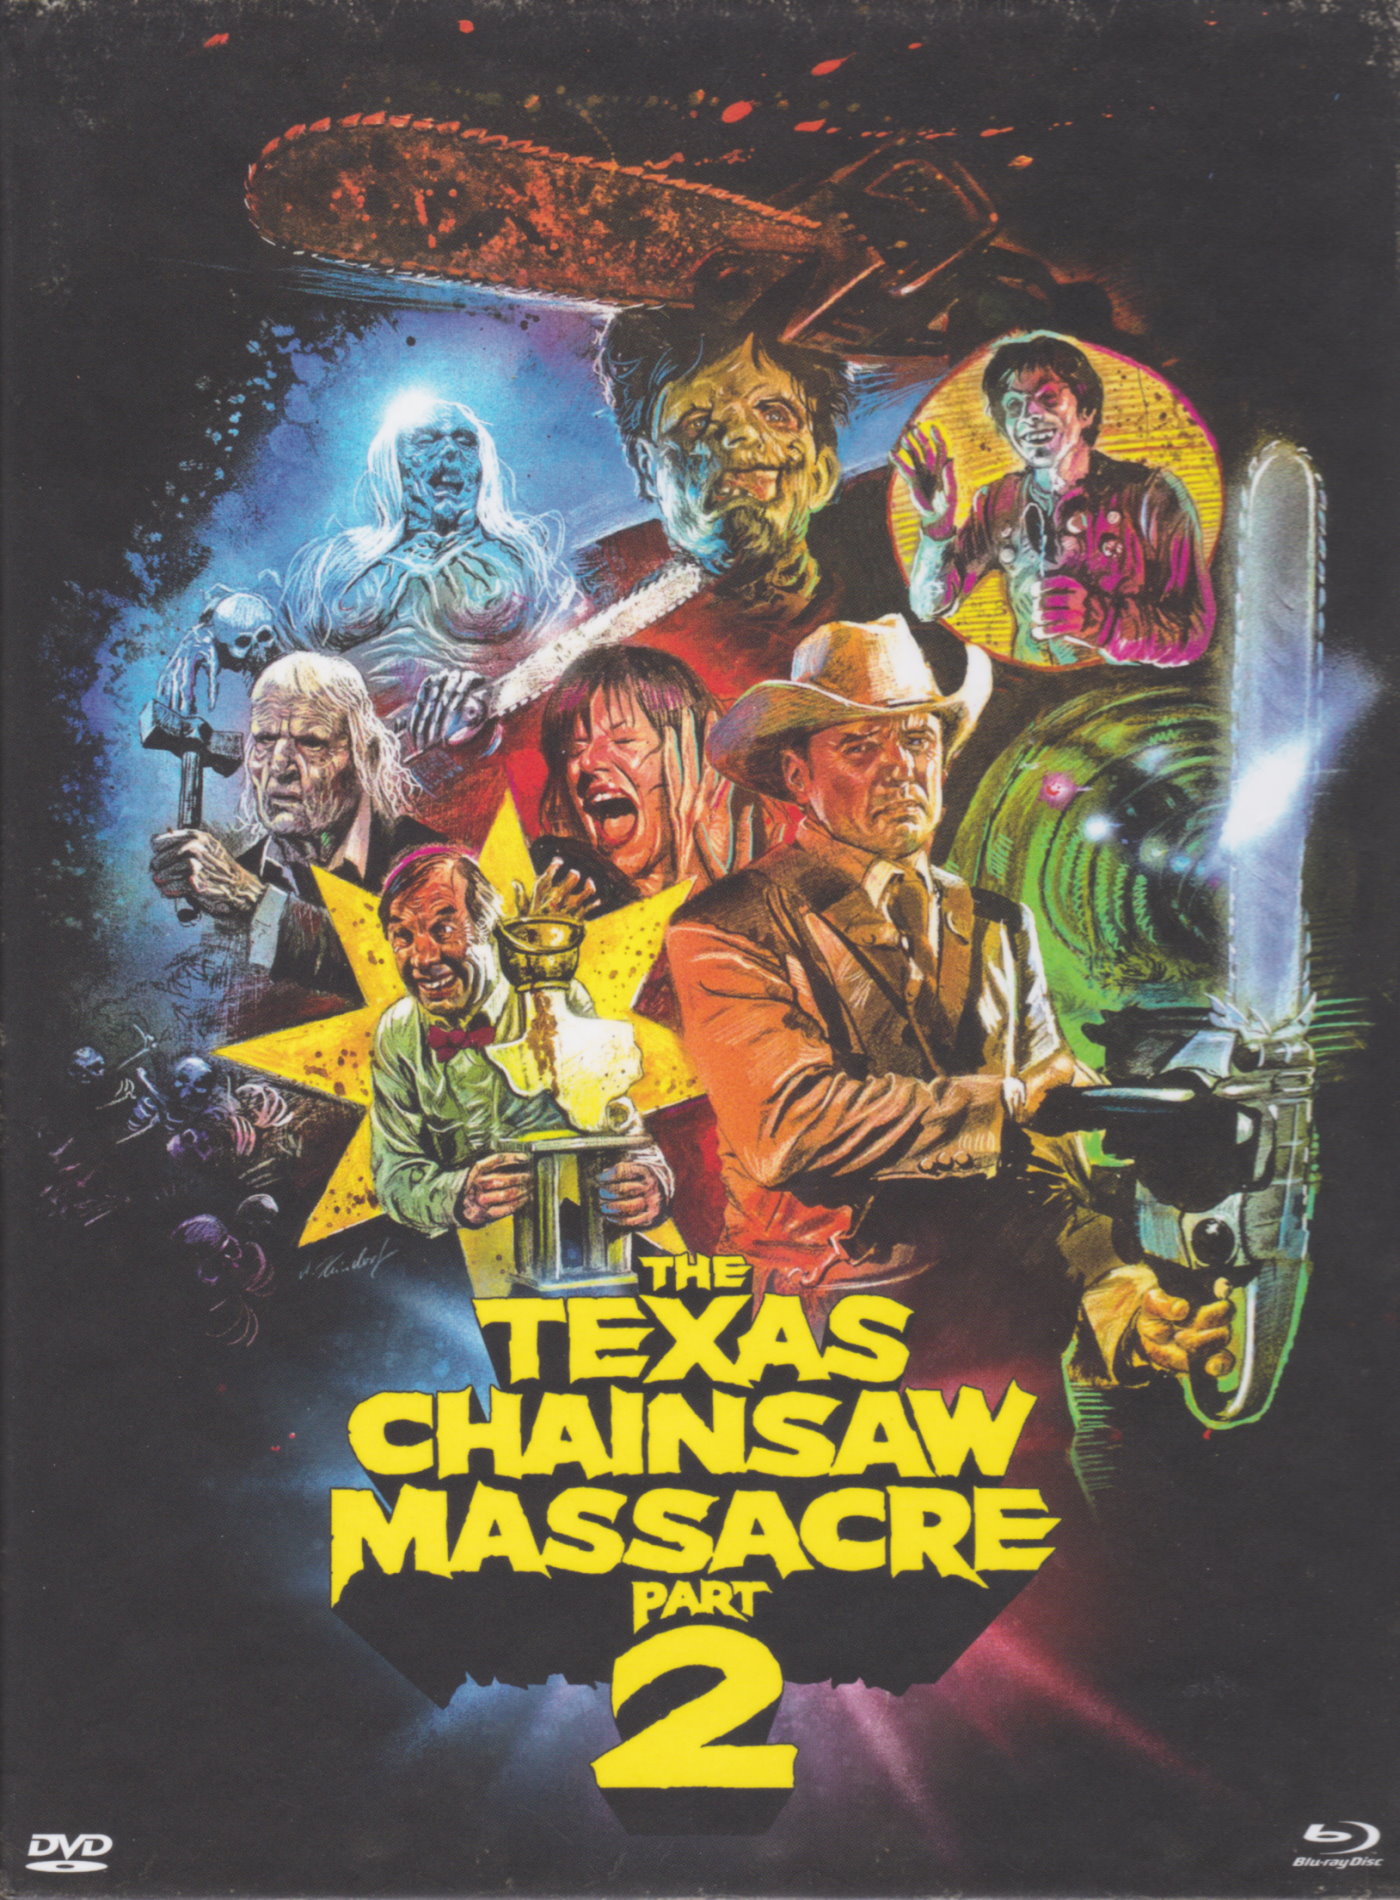 Cover - The Texas Chainsaw Massacre 2.jpg